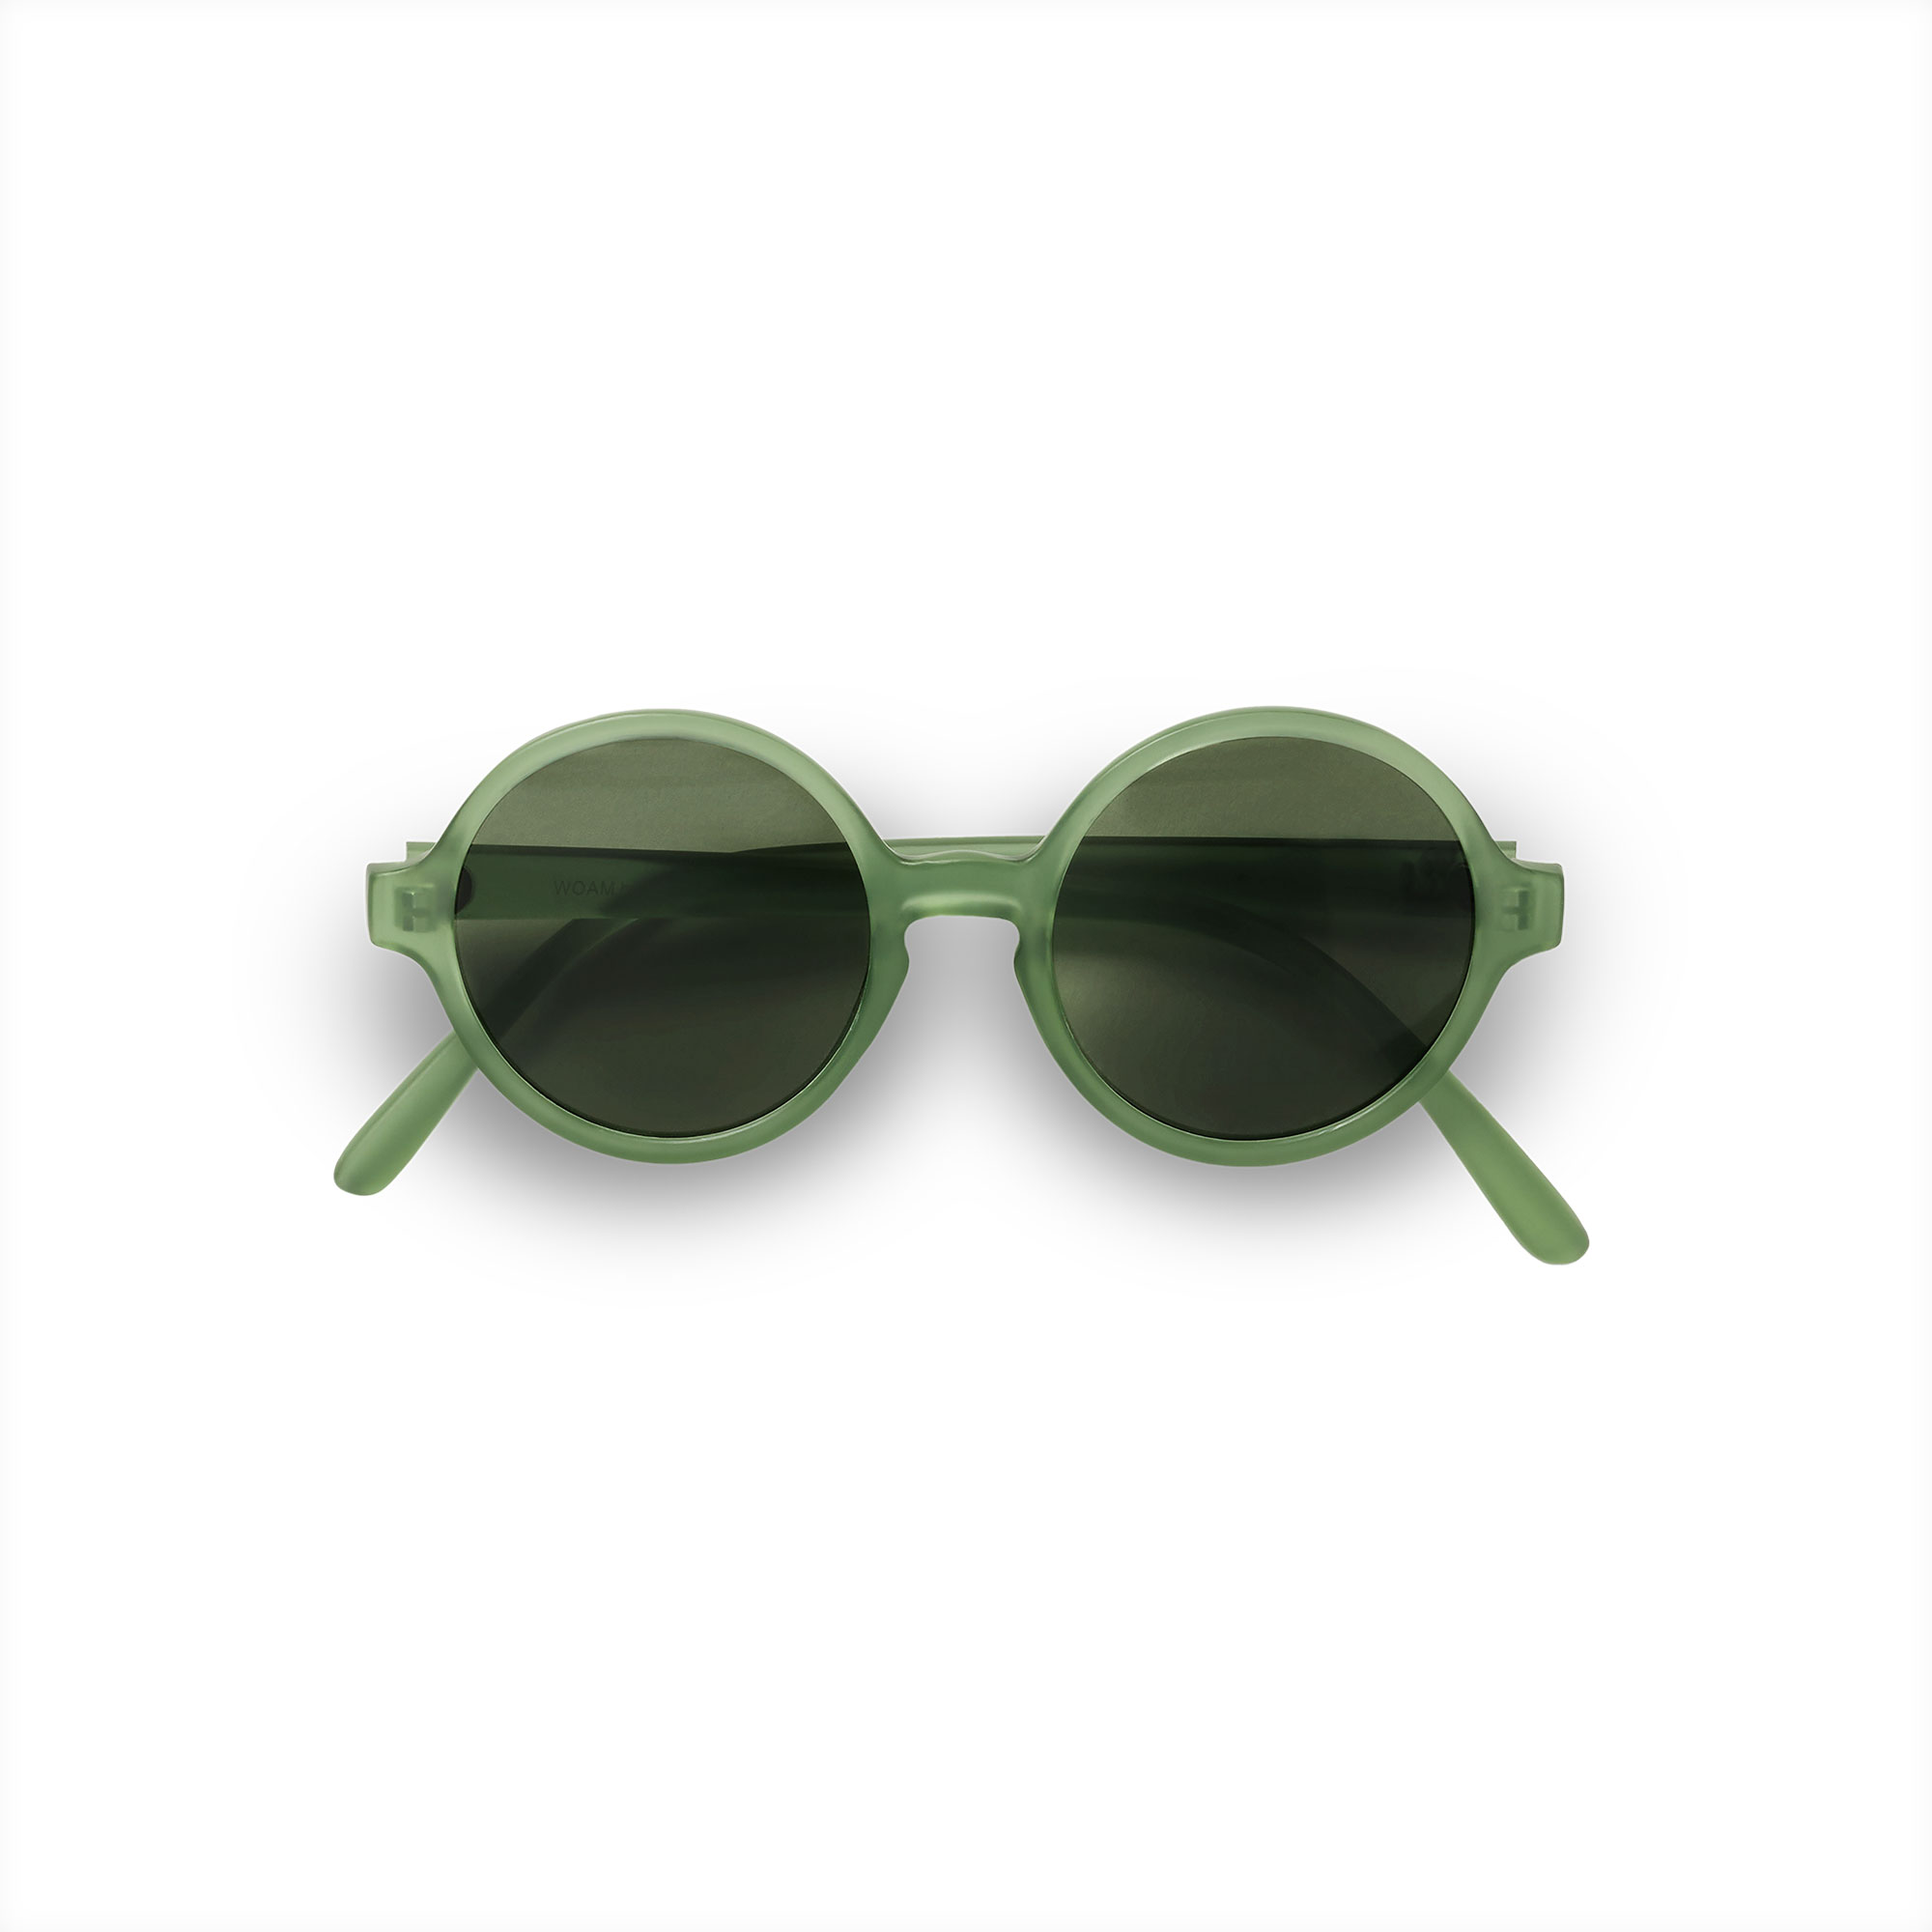 KIETLA WOAM slnečné okuliare pre dospelých- bottle-green